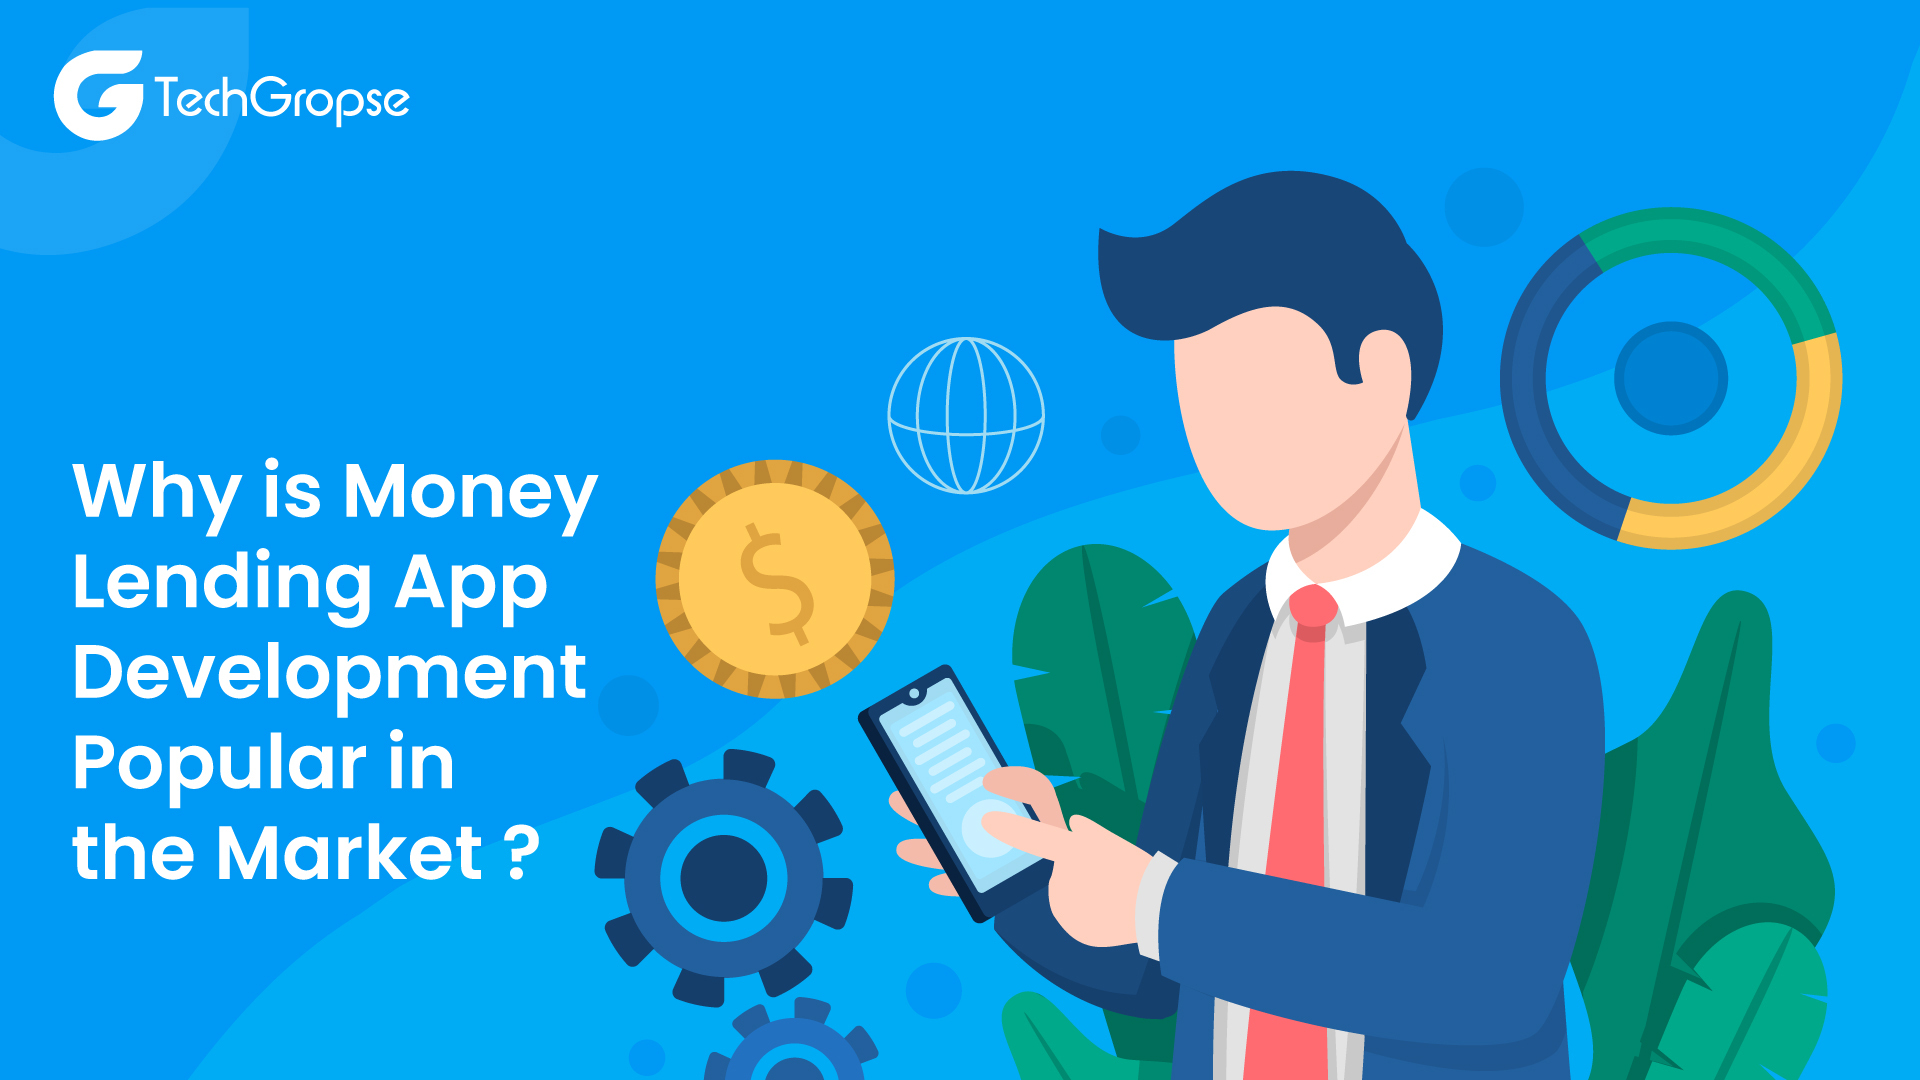 Why is Money Lending App Development Popular in the Market?